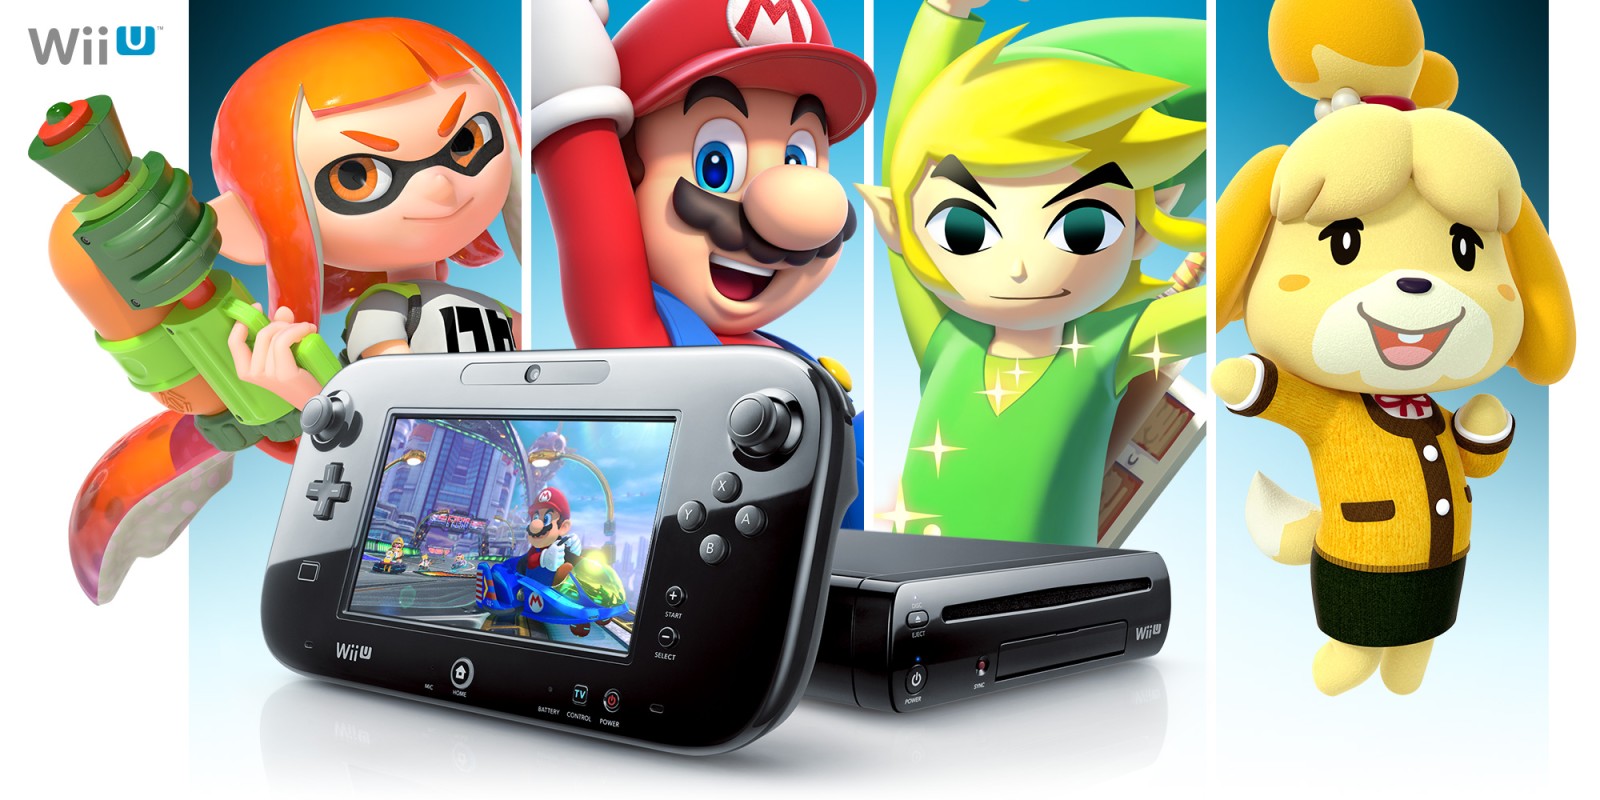 Ochtend Aanpassen Smaak Wii U | Nintendo